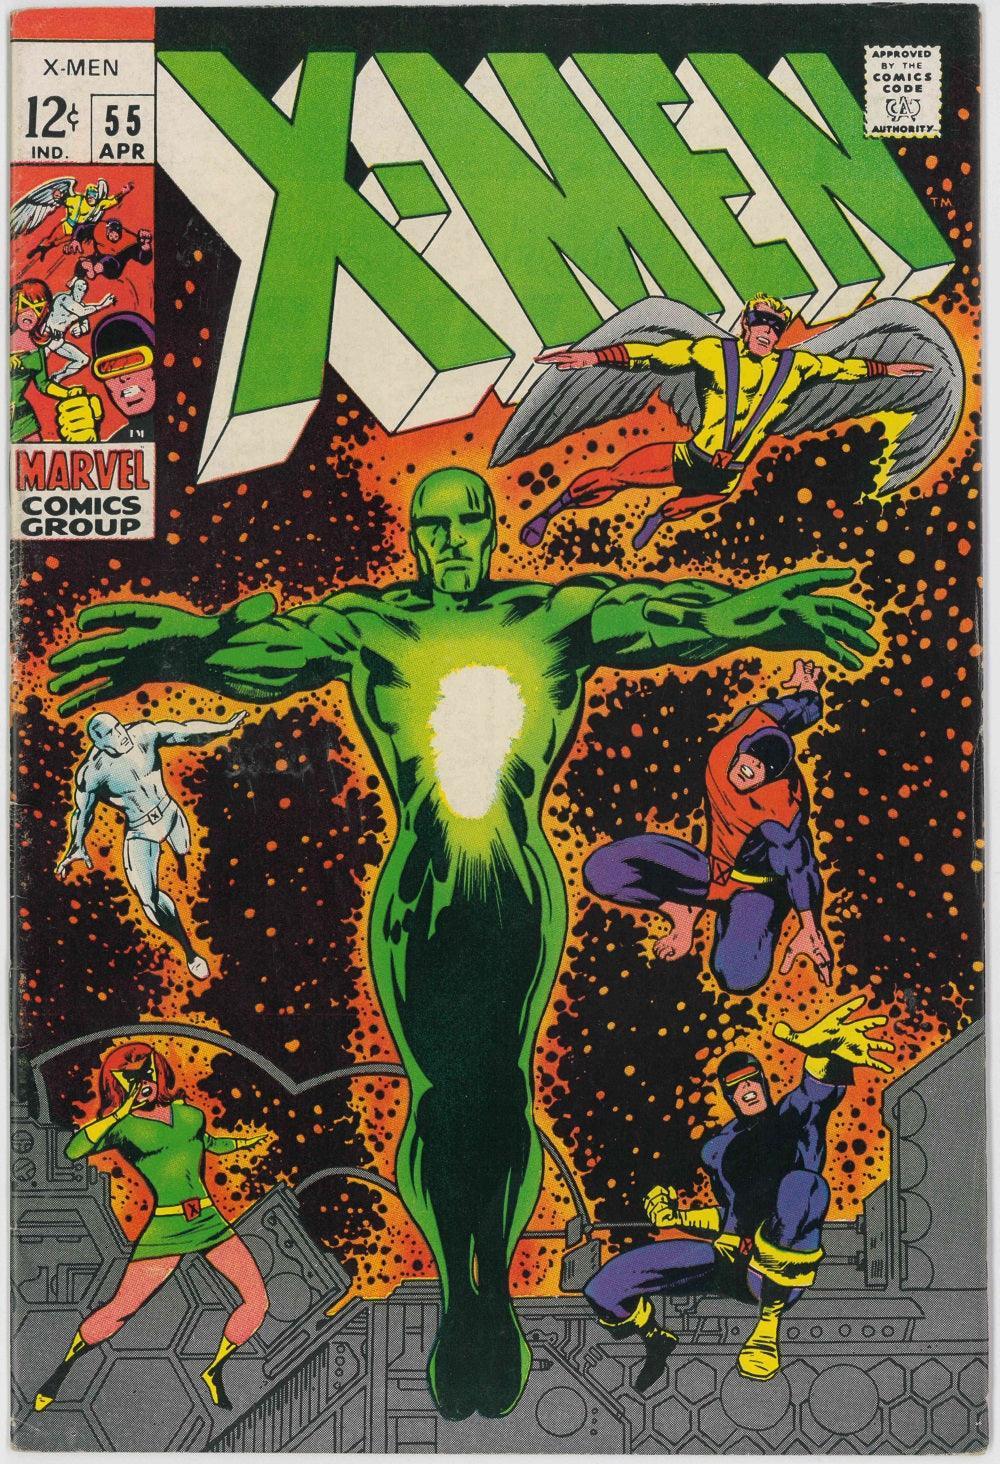 UNCANNY X-MEN (1963) #55 (VF) - Kings Comics